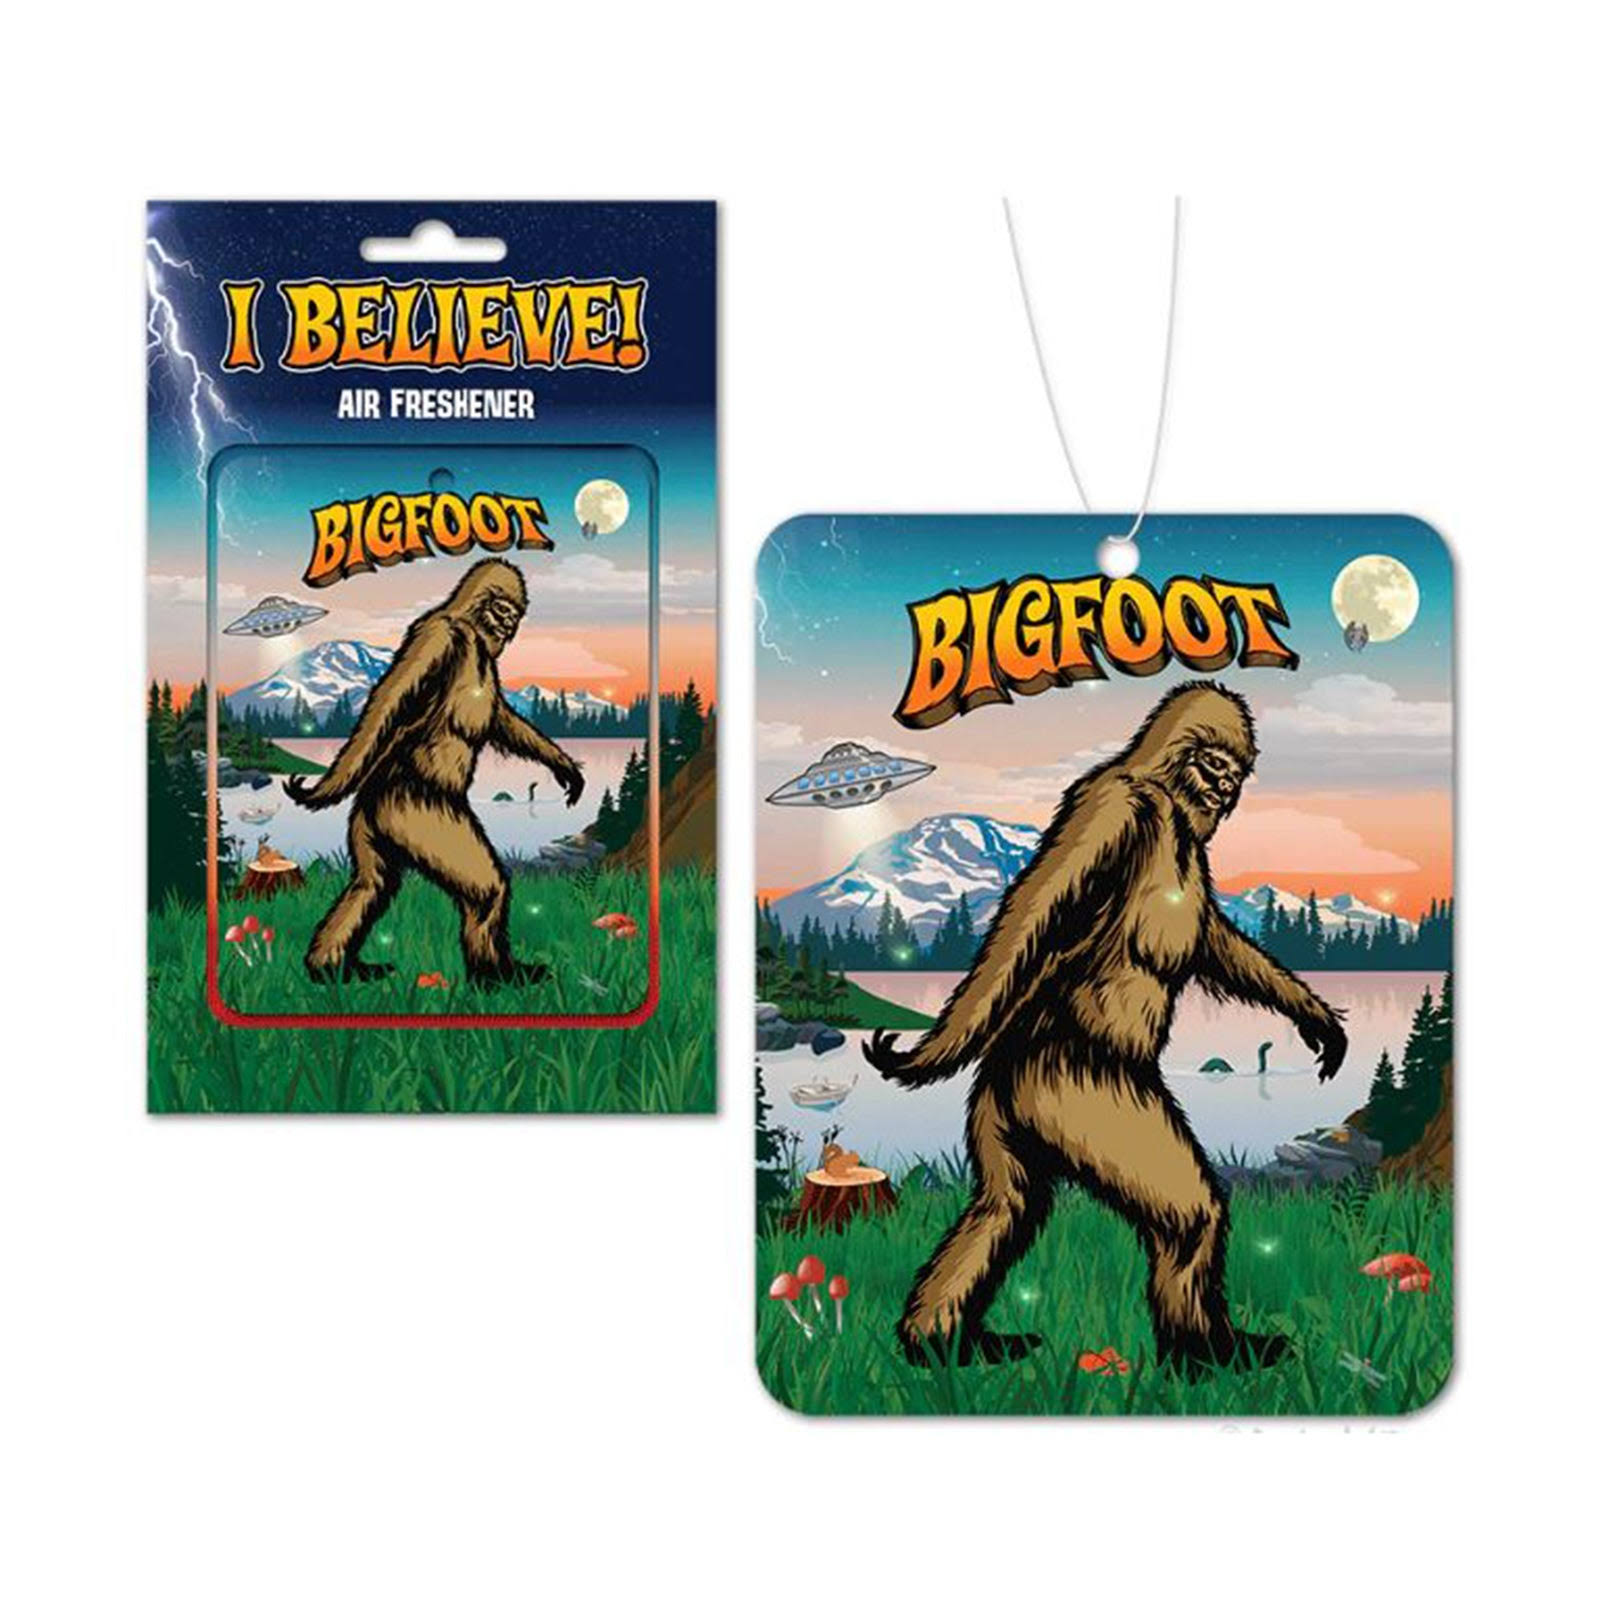 I Believe Bigfoot Air Freshener - Pine Scented